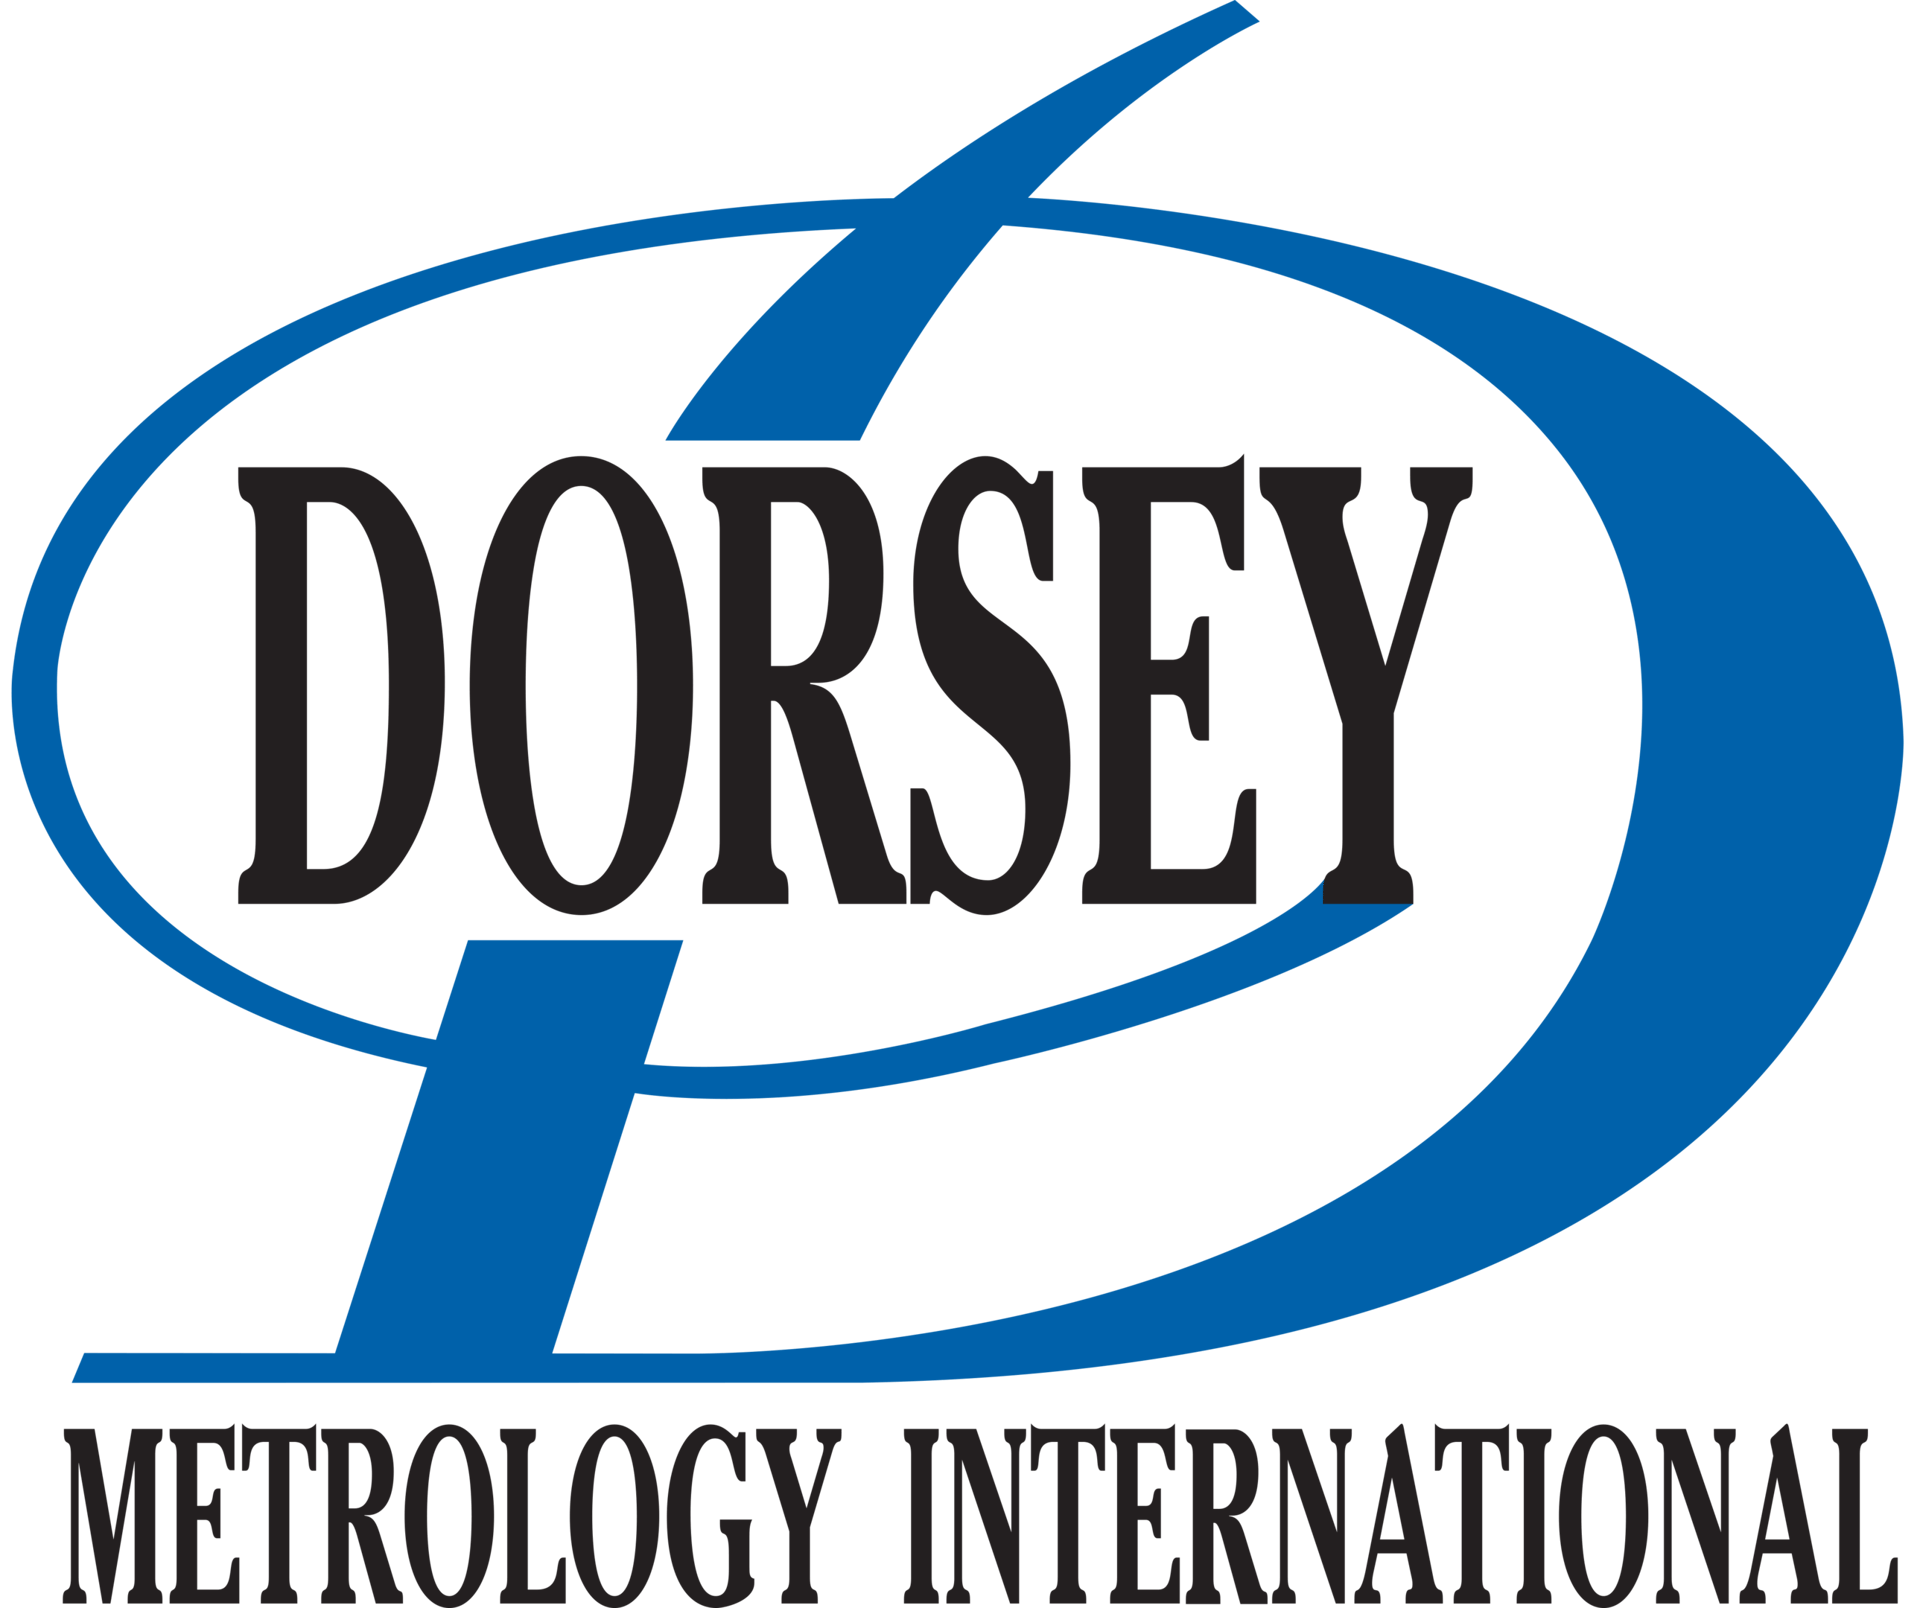 Dorsey Metrology International